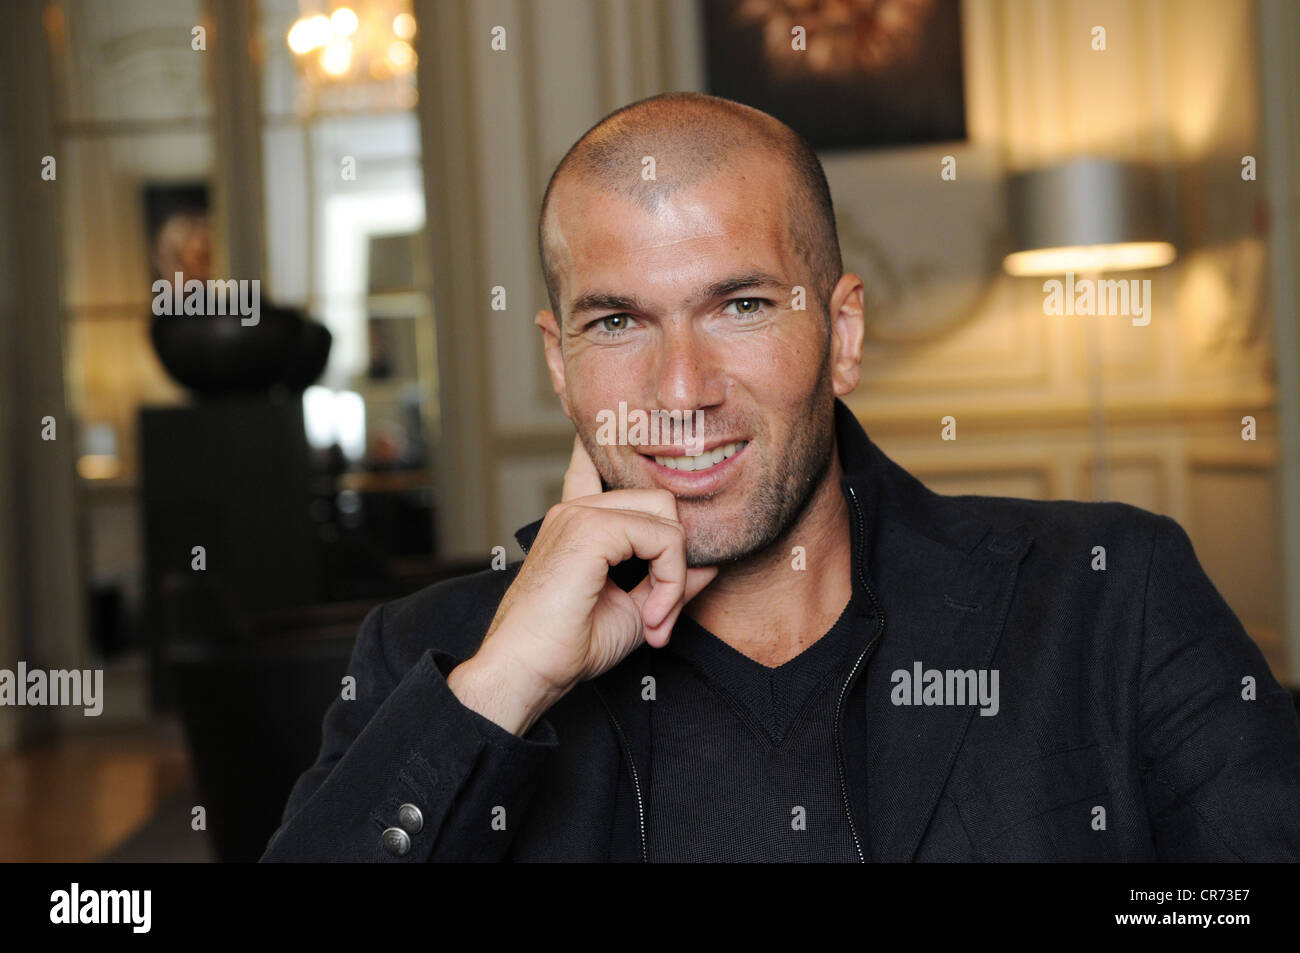 Zidane, Zinedine, * 23.6.1972, French athlete (footballer), during interview, Madrid, 1.4.2008, Stock Photo